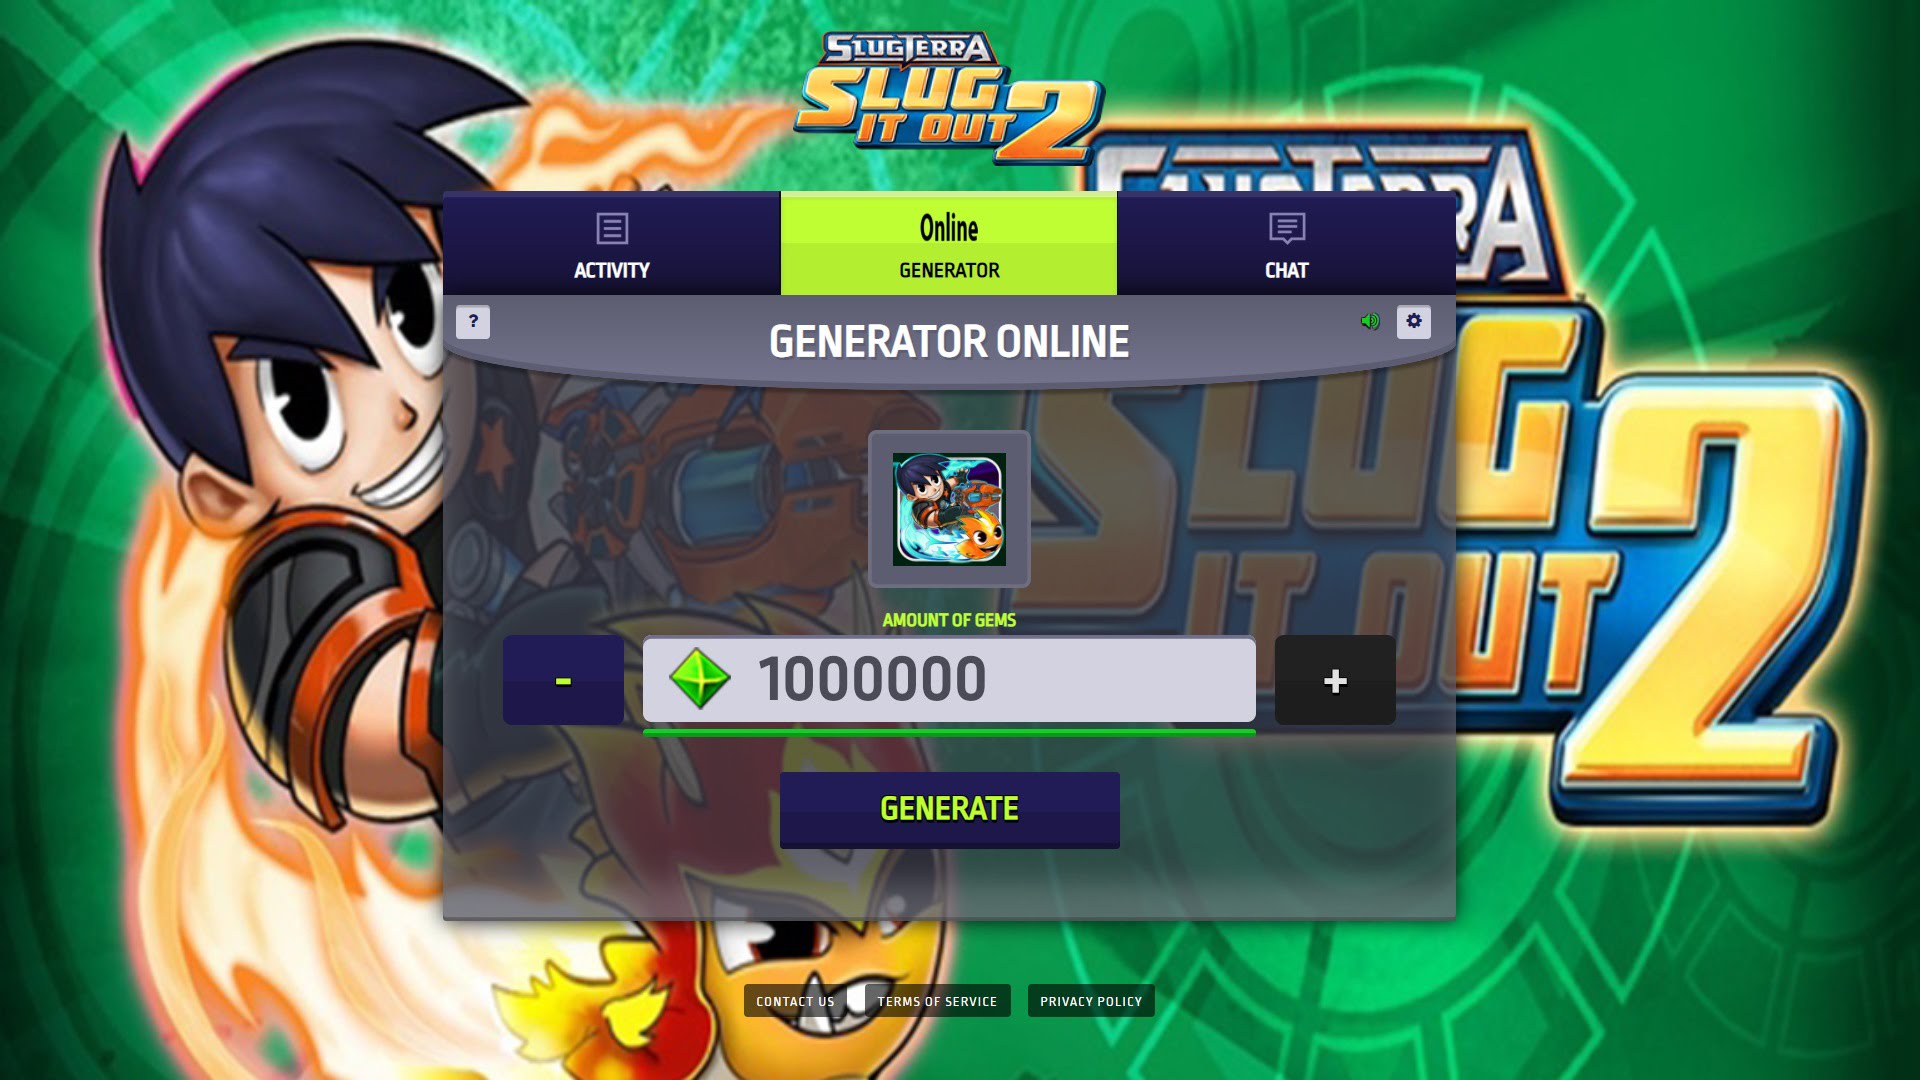 slugterra slug it out game play online